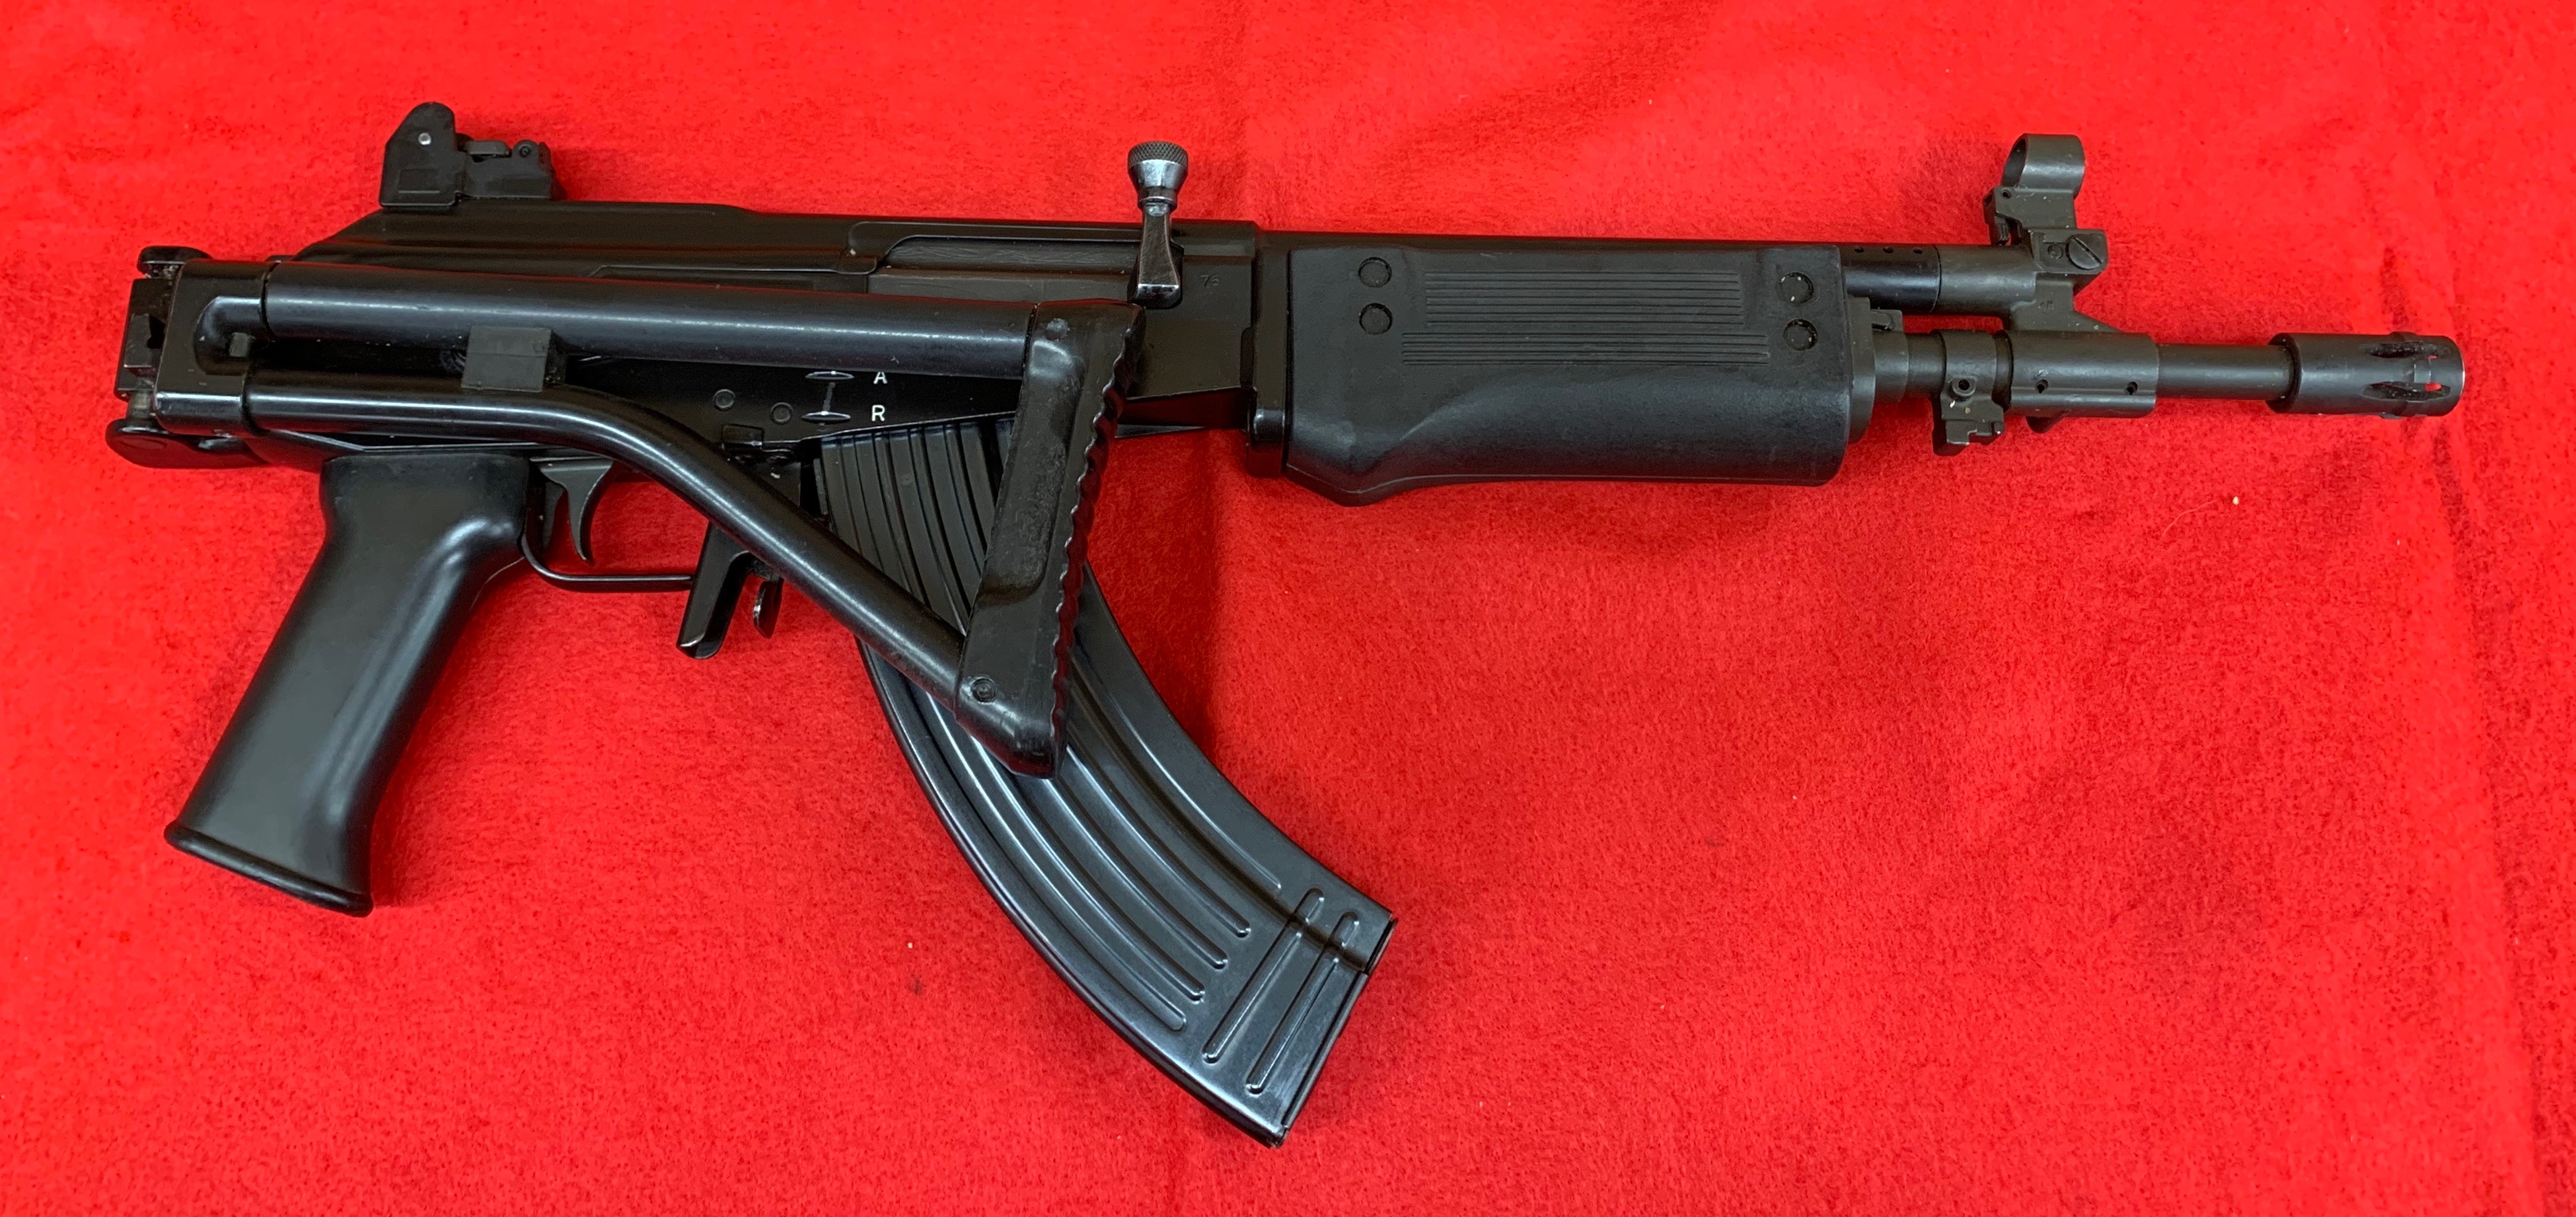 GunSpot Guns for sale | Gun Auction: IMI Galil SAR 5.56